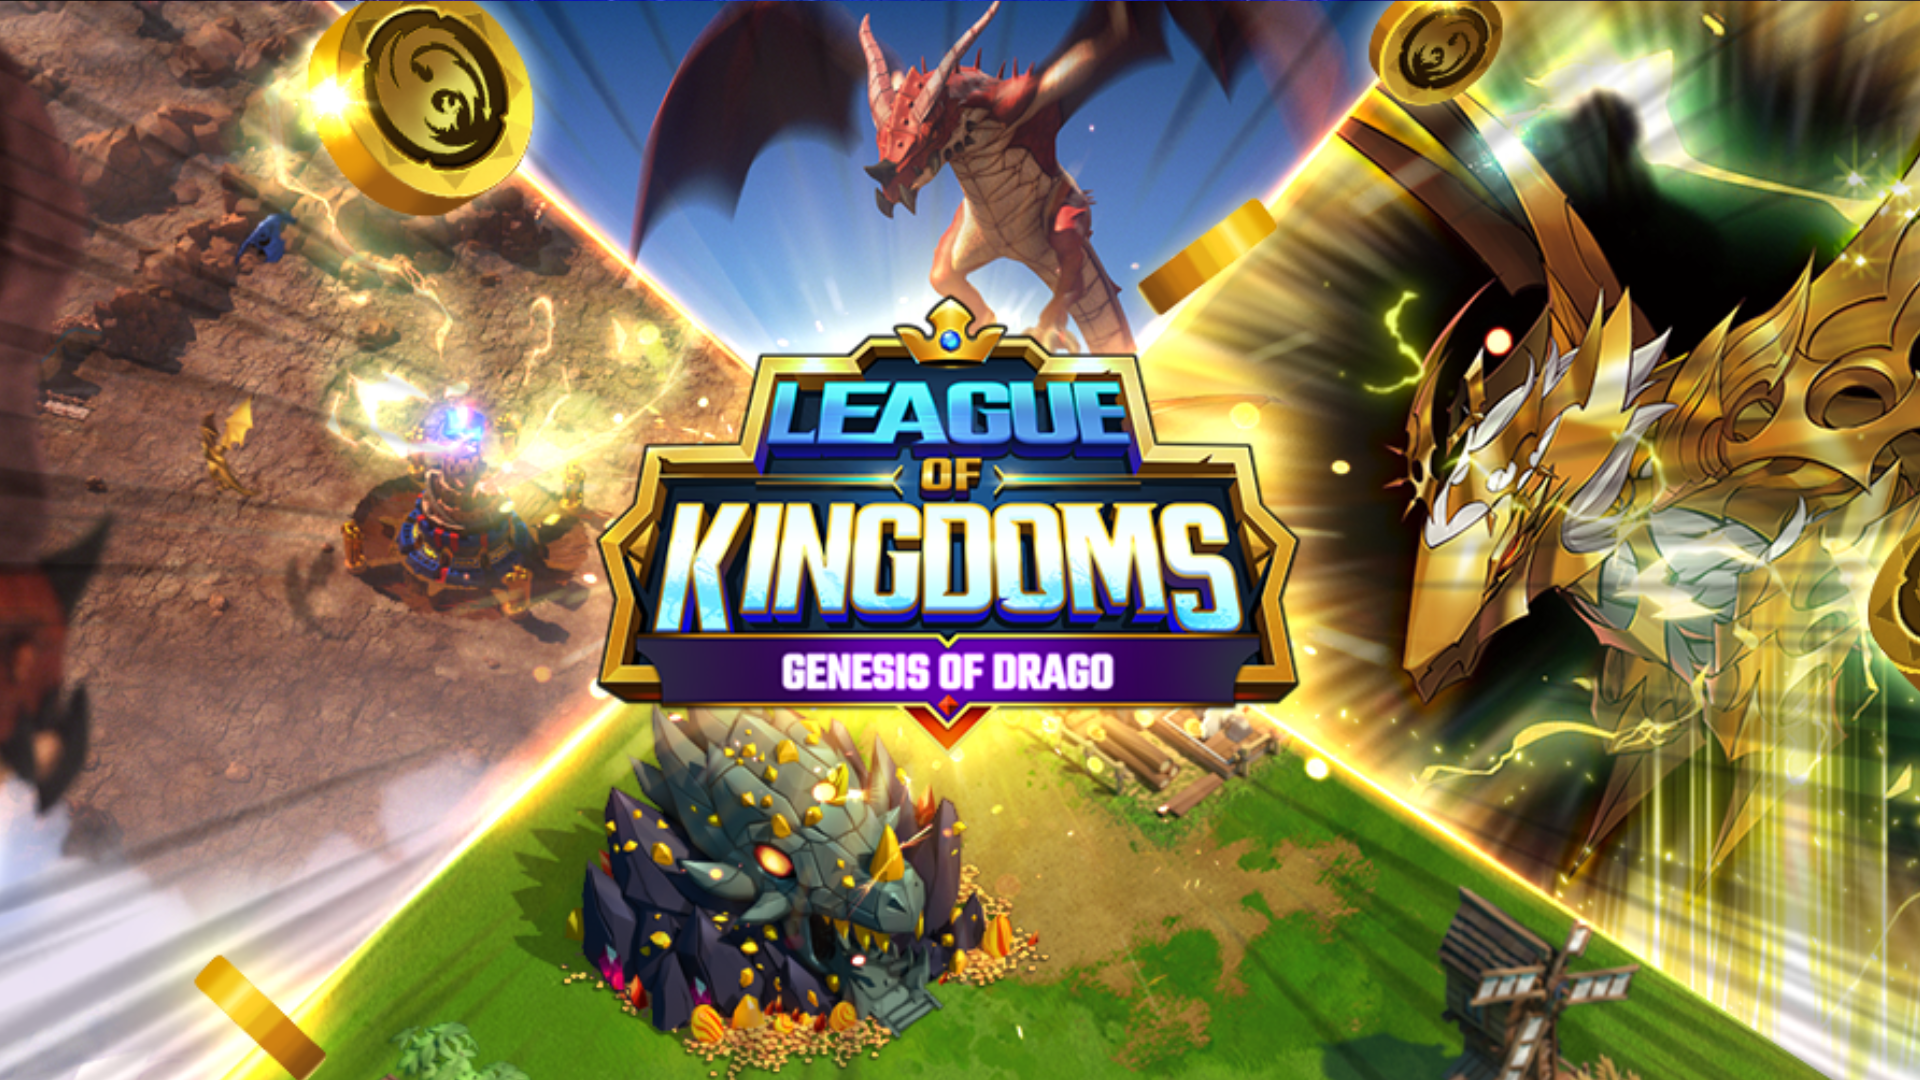 League of Kingdoms bakal rilis update Drago bisa kasih NFT bentuk naga. Foto: League of Kingdoms.